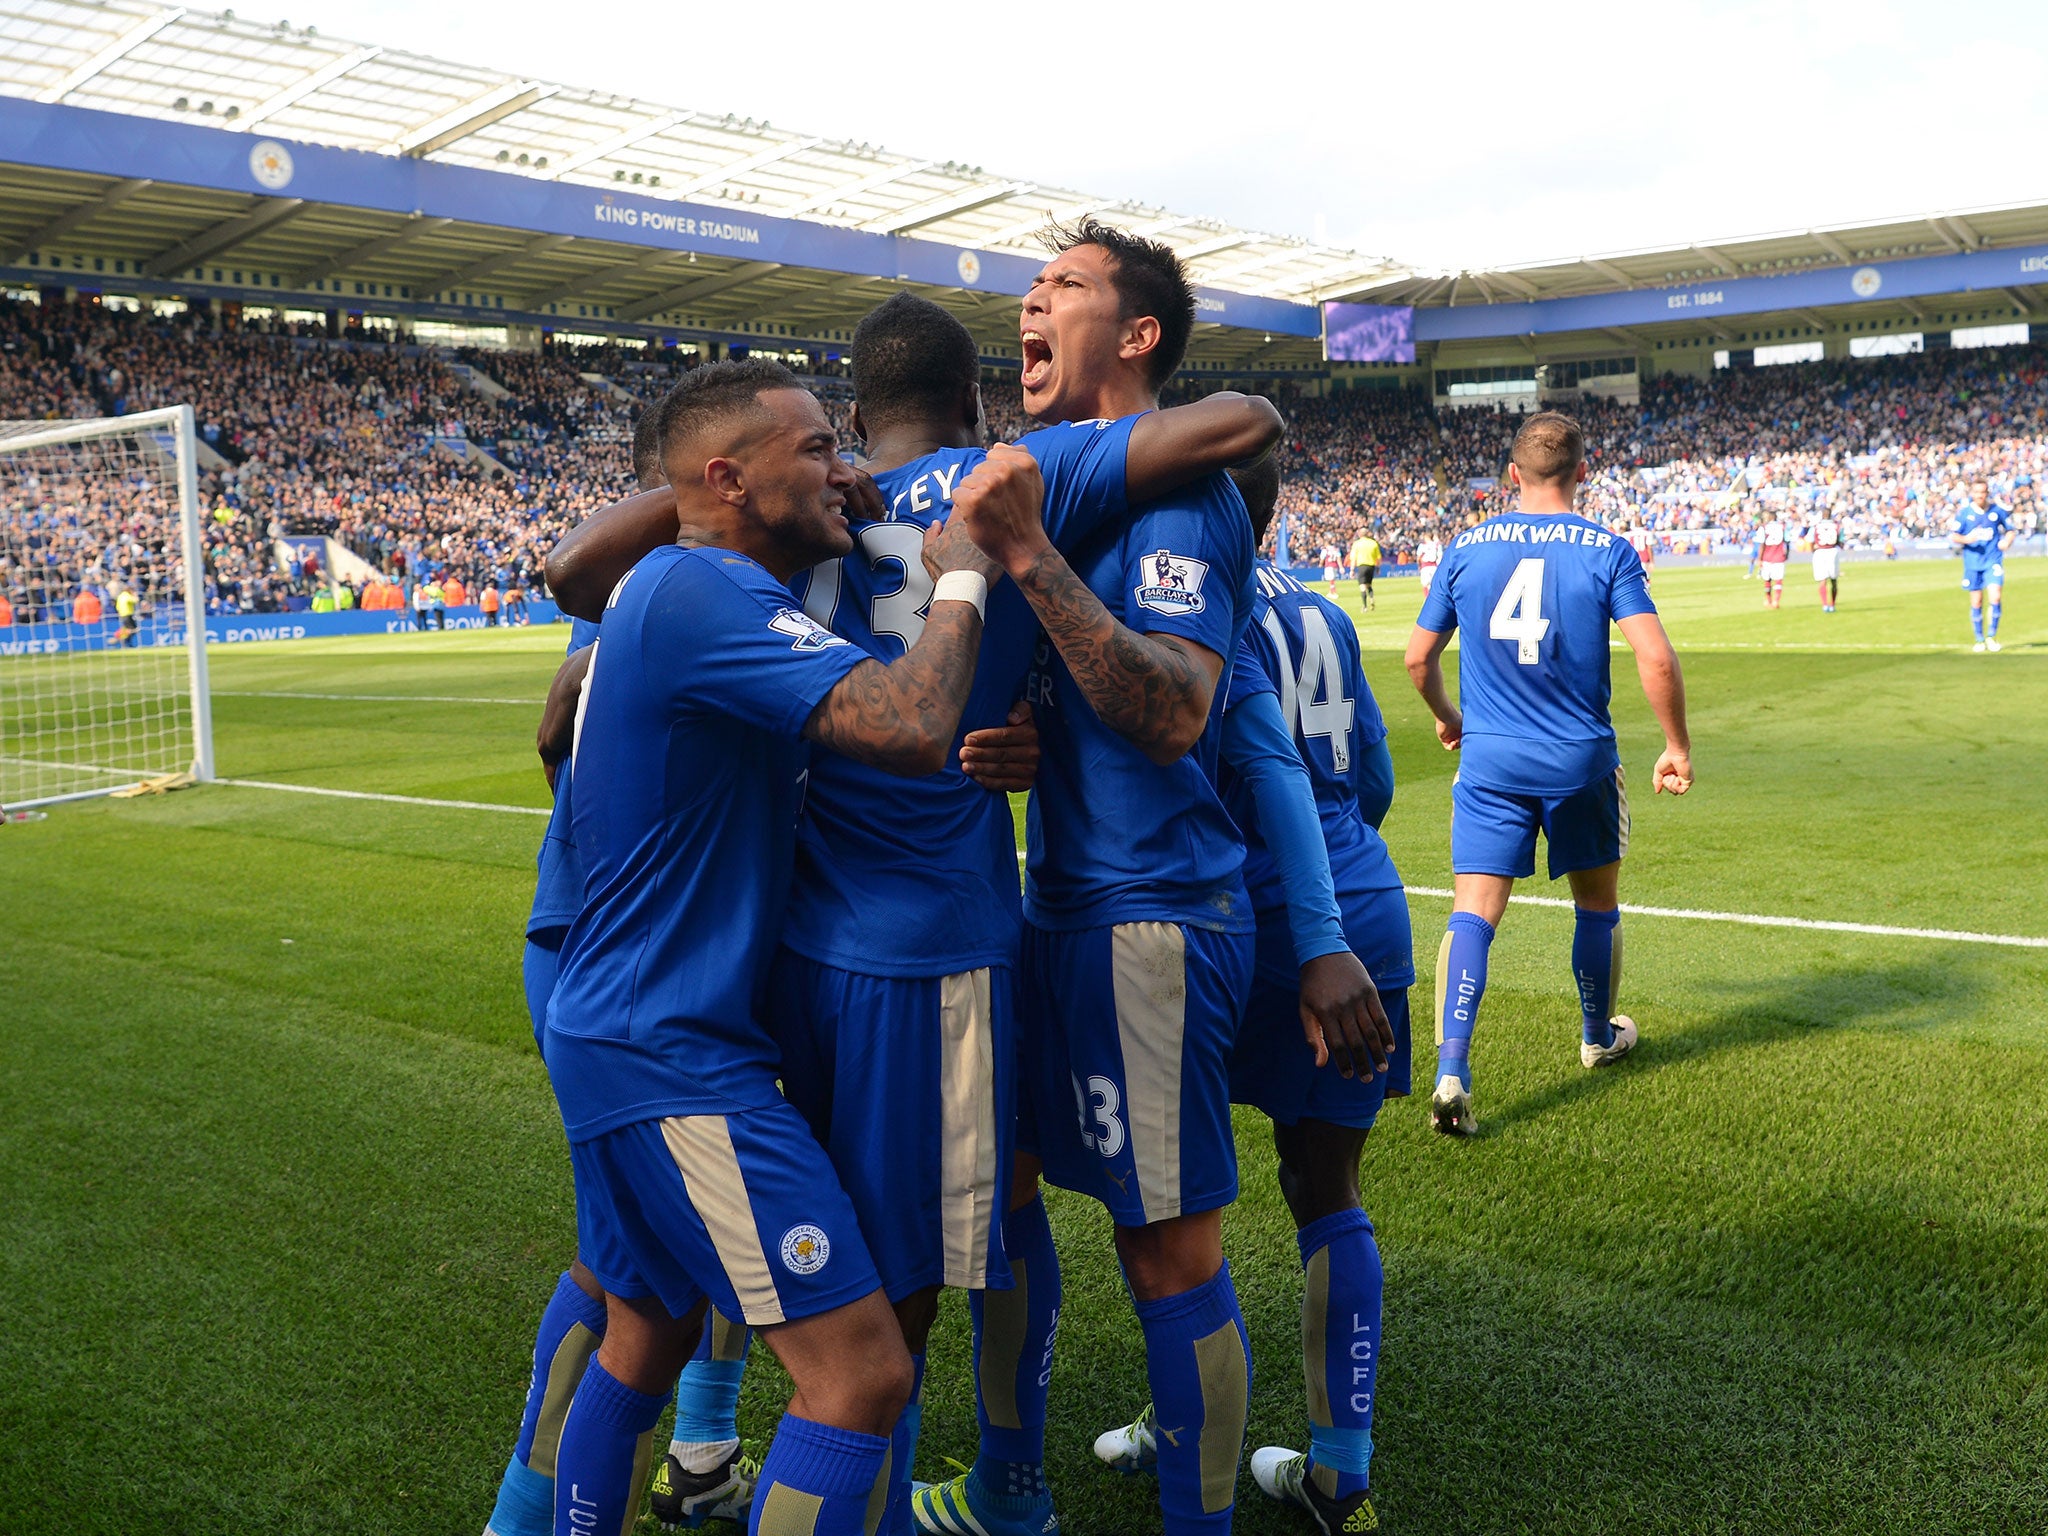 Leicester celebrate following Leonardo Ulloa's late equaliser against West Ham